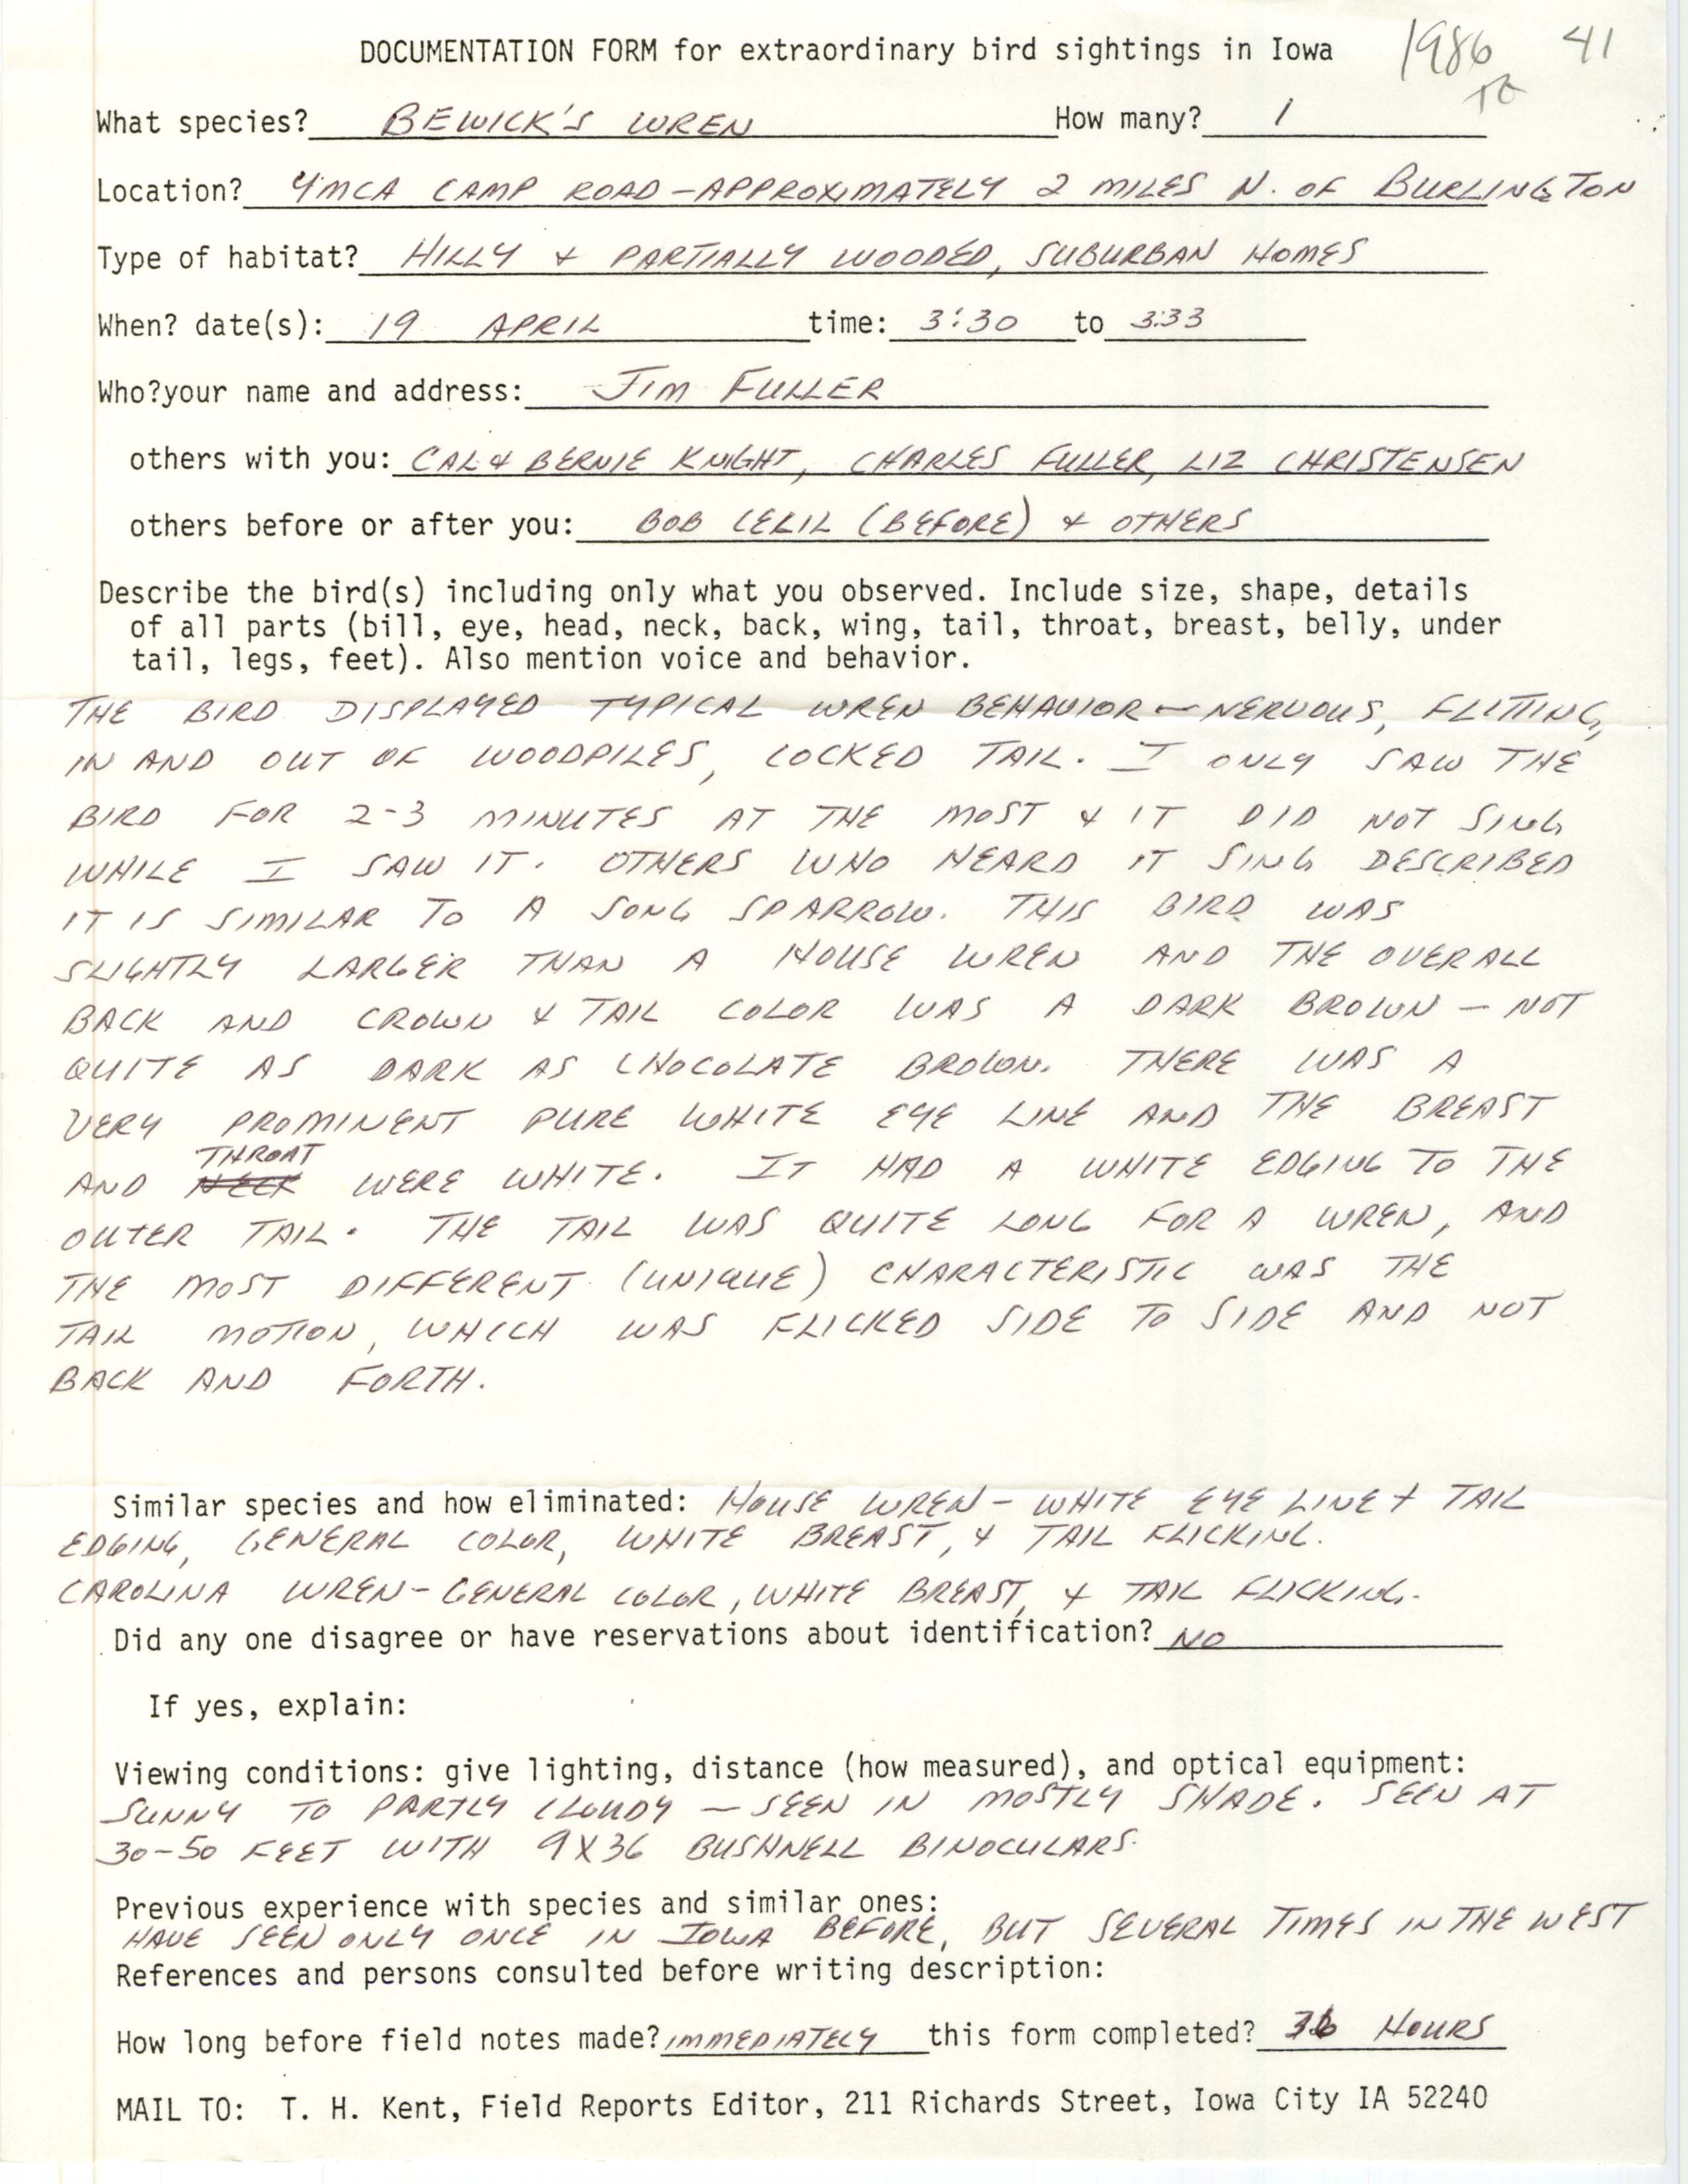 Rare bird documentation form for Bewick's Wren north of Burlington, 1986